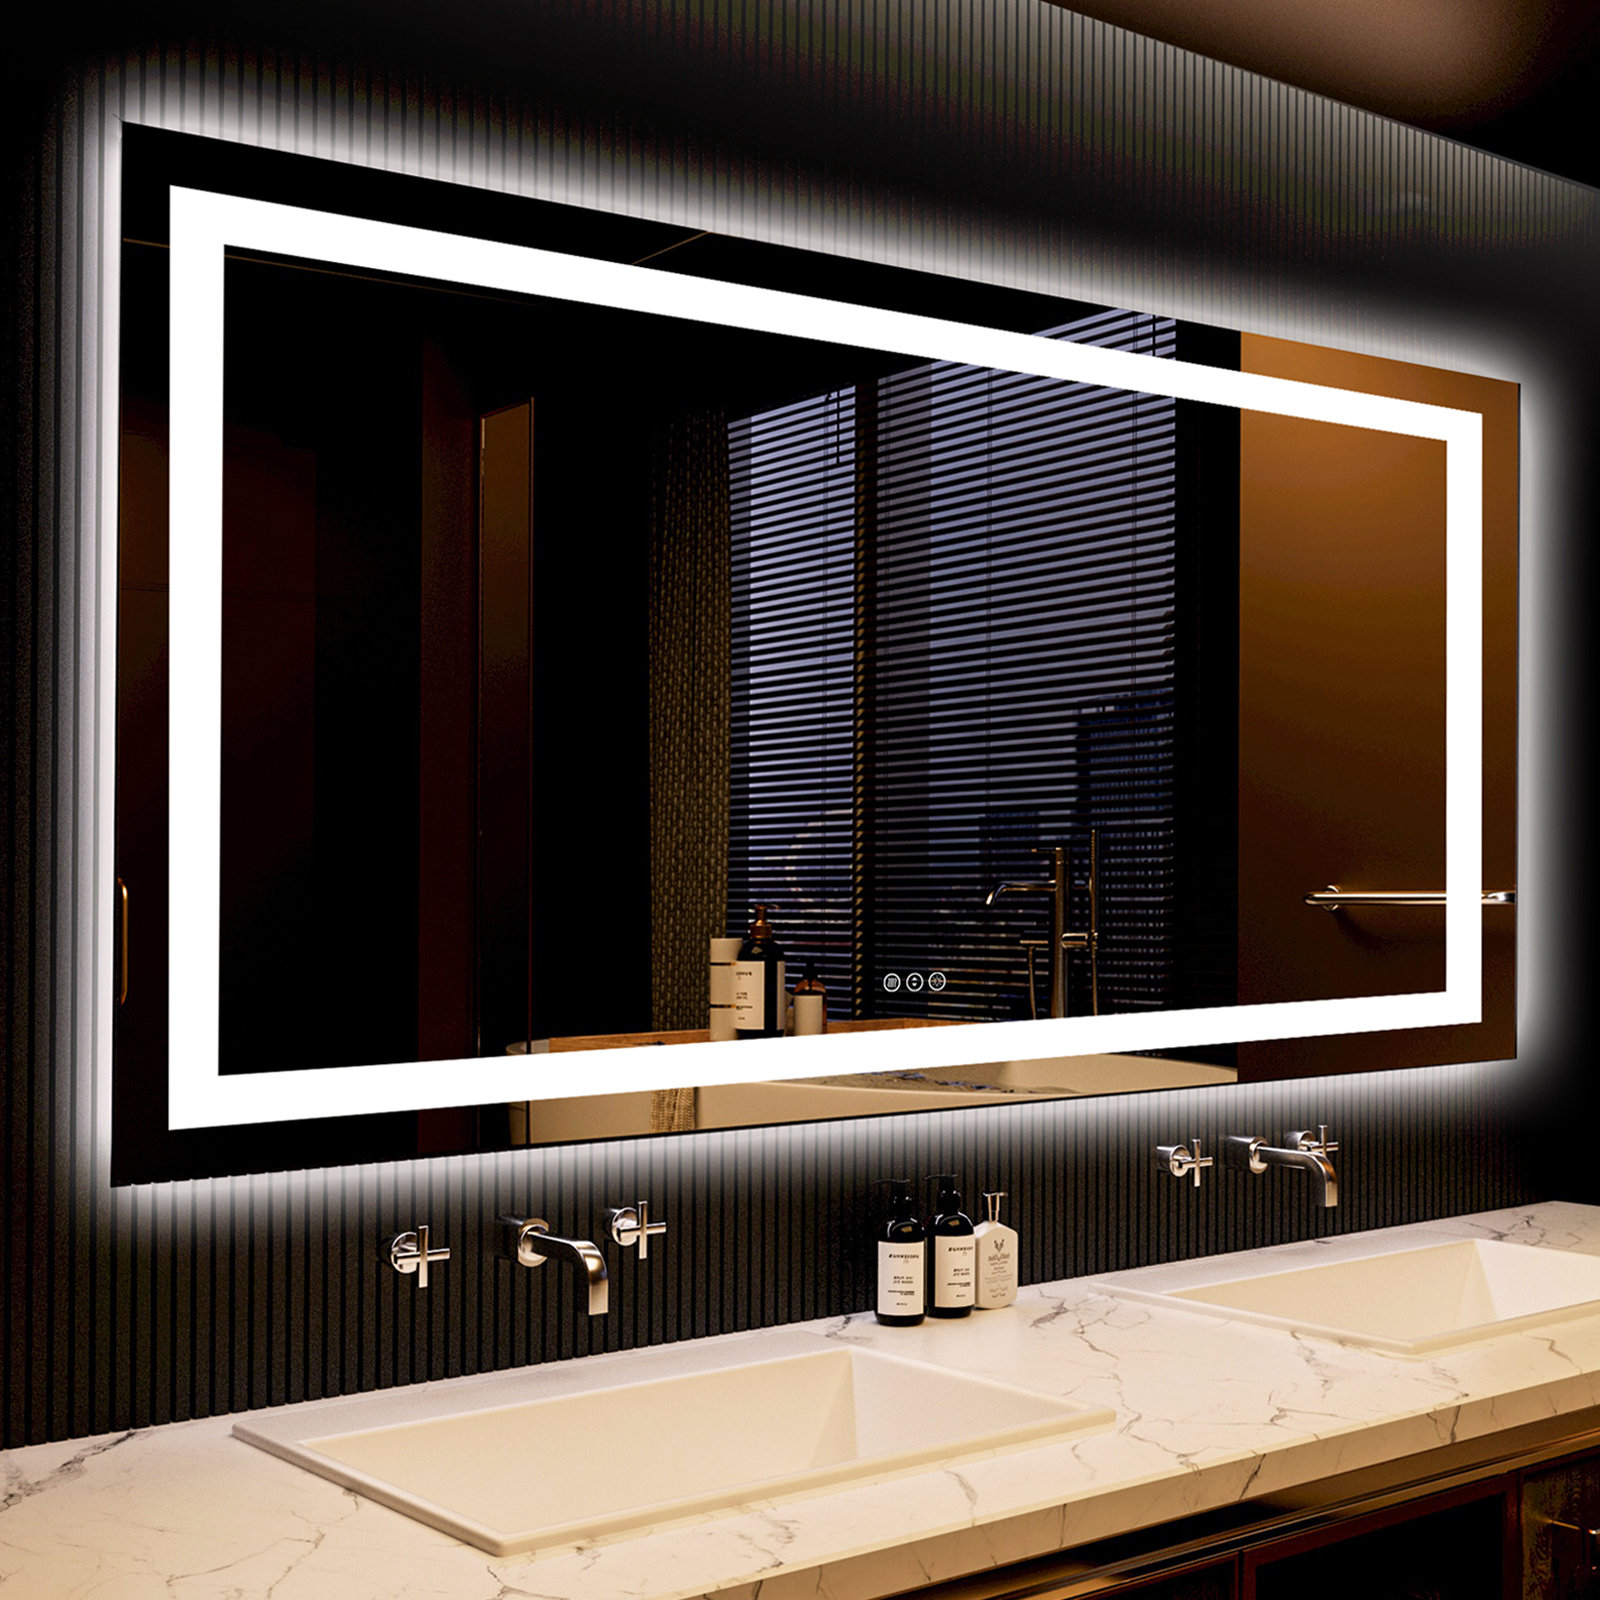 LED Black Framed Bathroom Vanity Mirror, Illuminated Dimmable Anti Fog Makeup Mirror, 3 Color Light Orren Ellis Size: 40 x 32